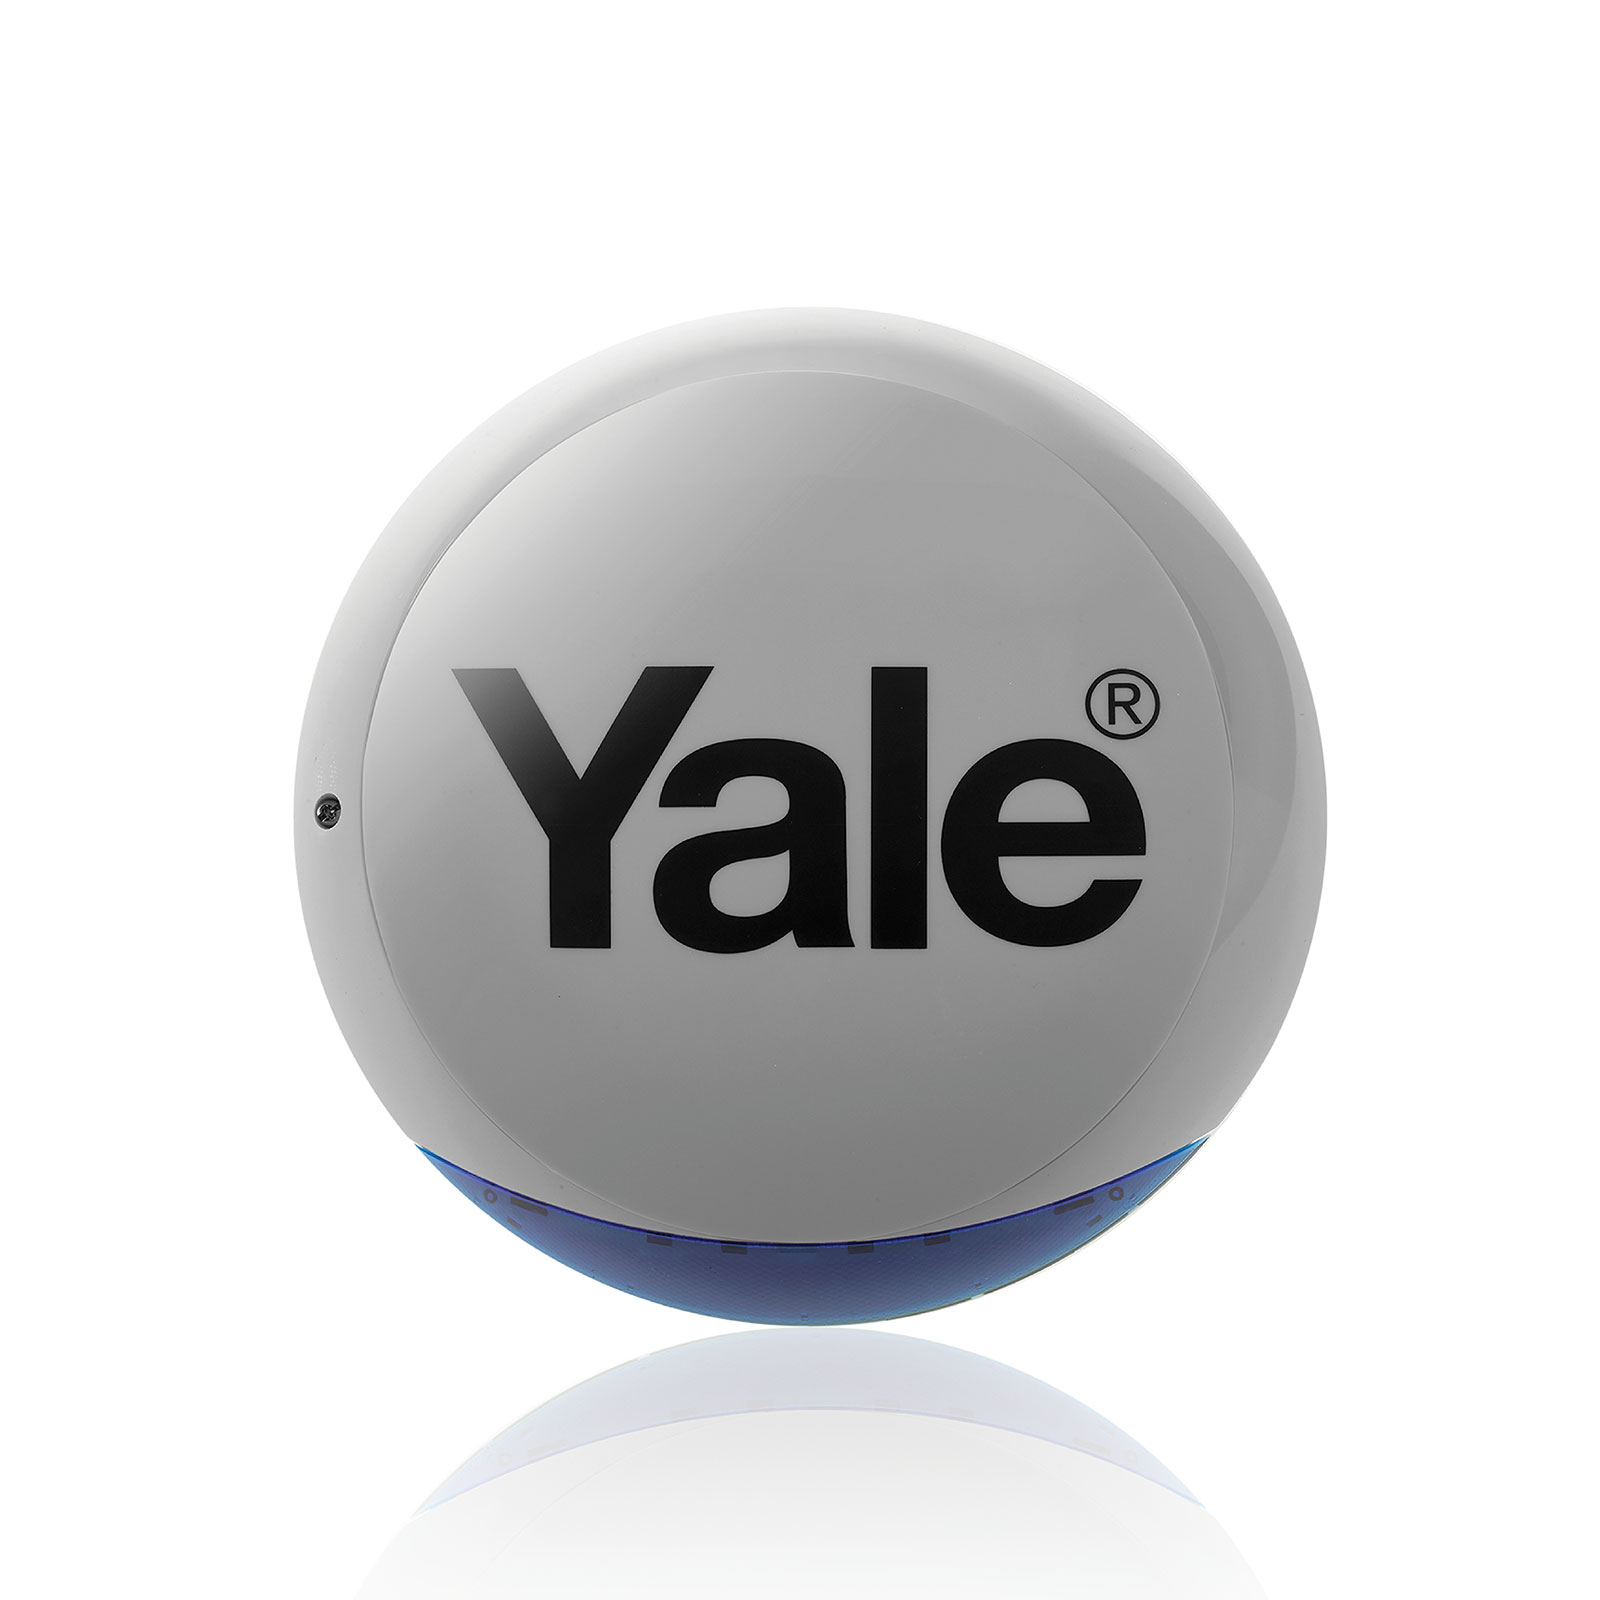 Yale Sync utomussiren i grått